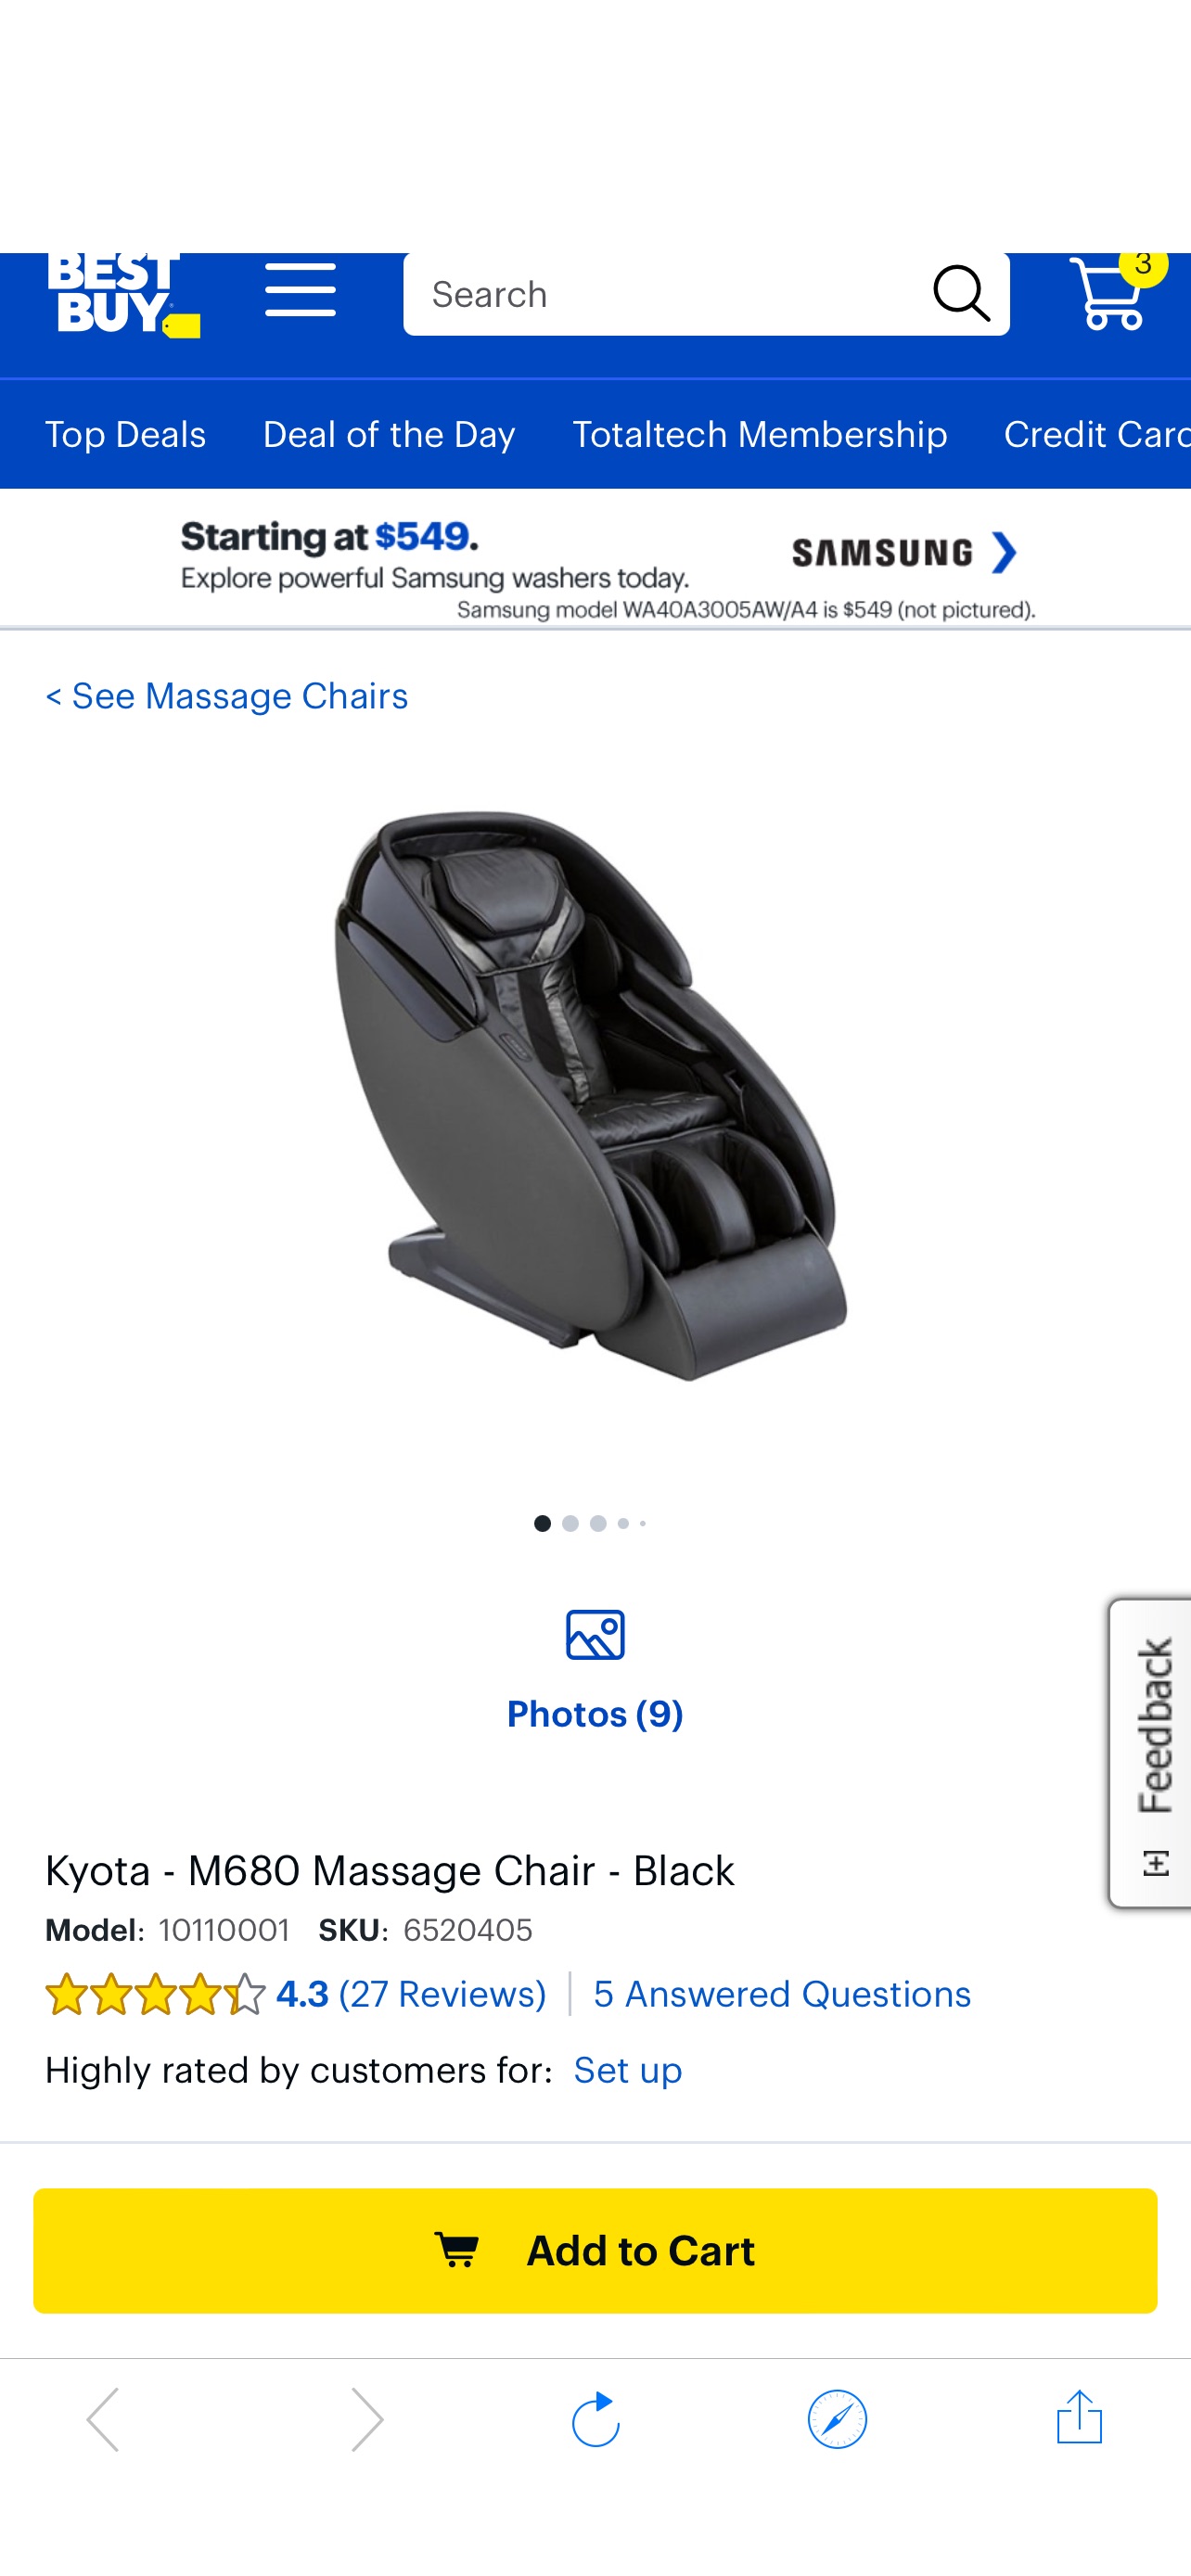 Kyota M680 Massage Chair Black 10110001 - Best Buy